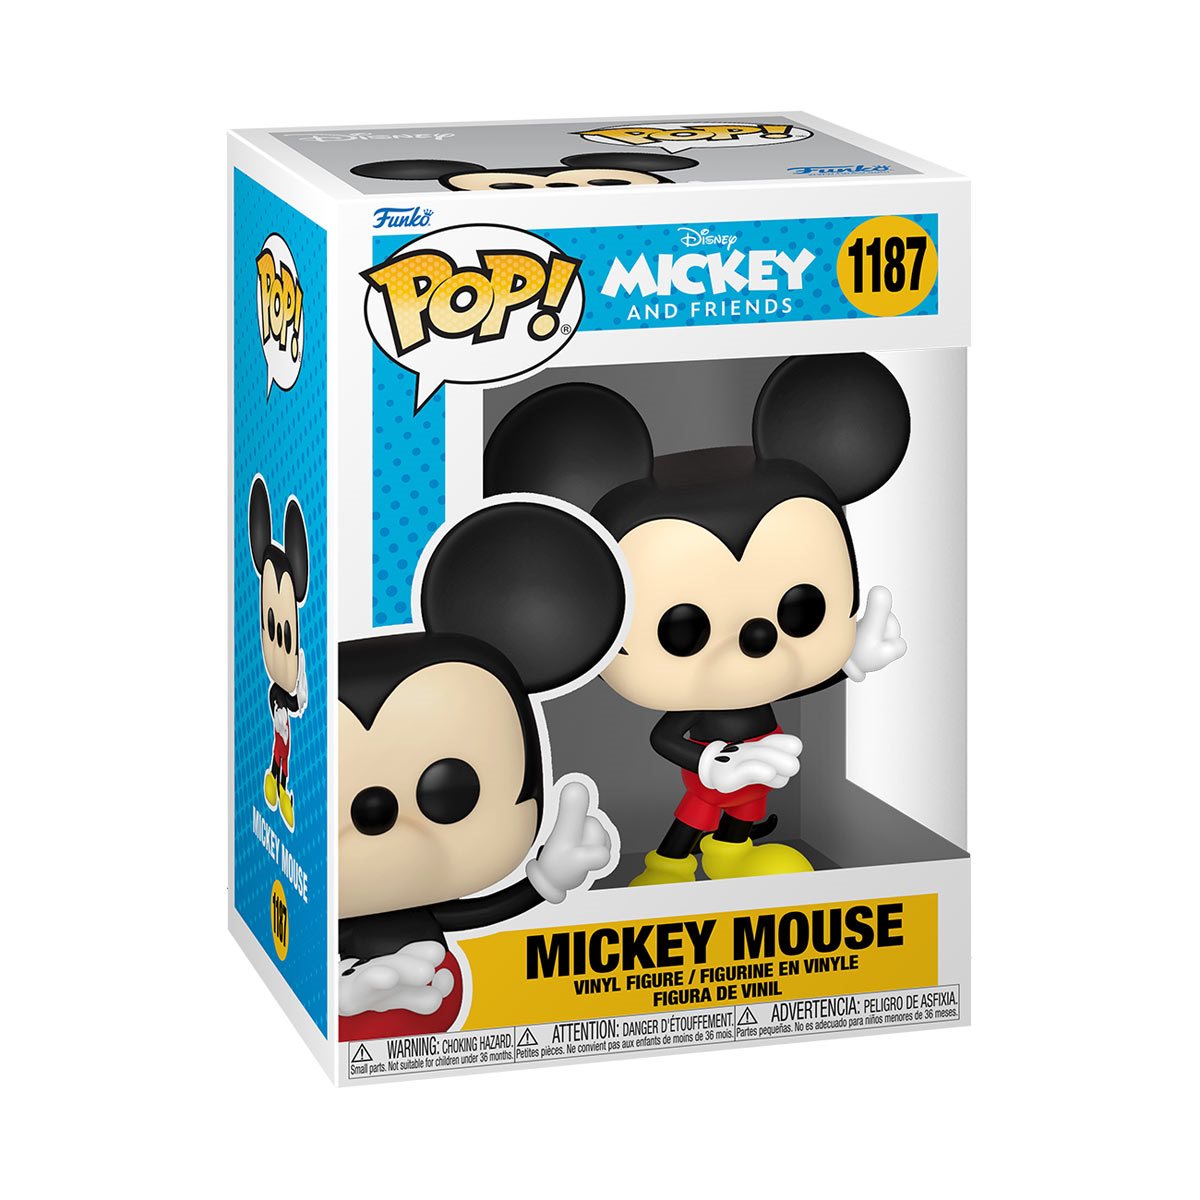 Funko Pop! Disney Classics Mickey Mouse Pop! Vinyl Figure